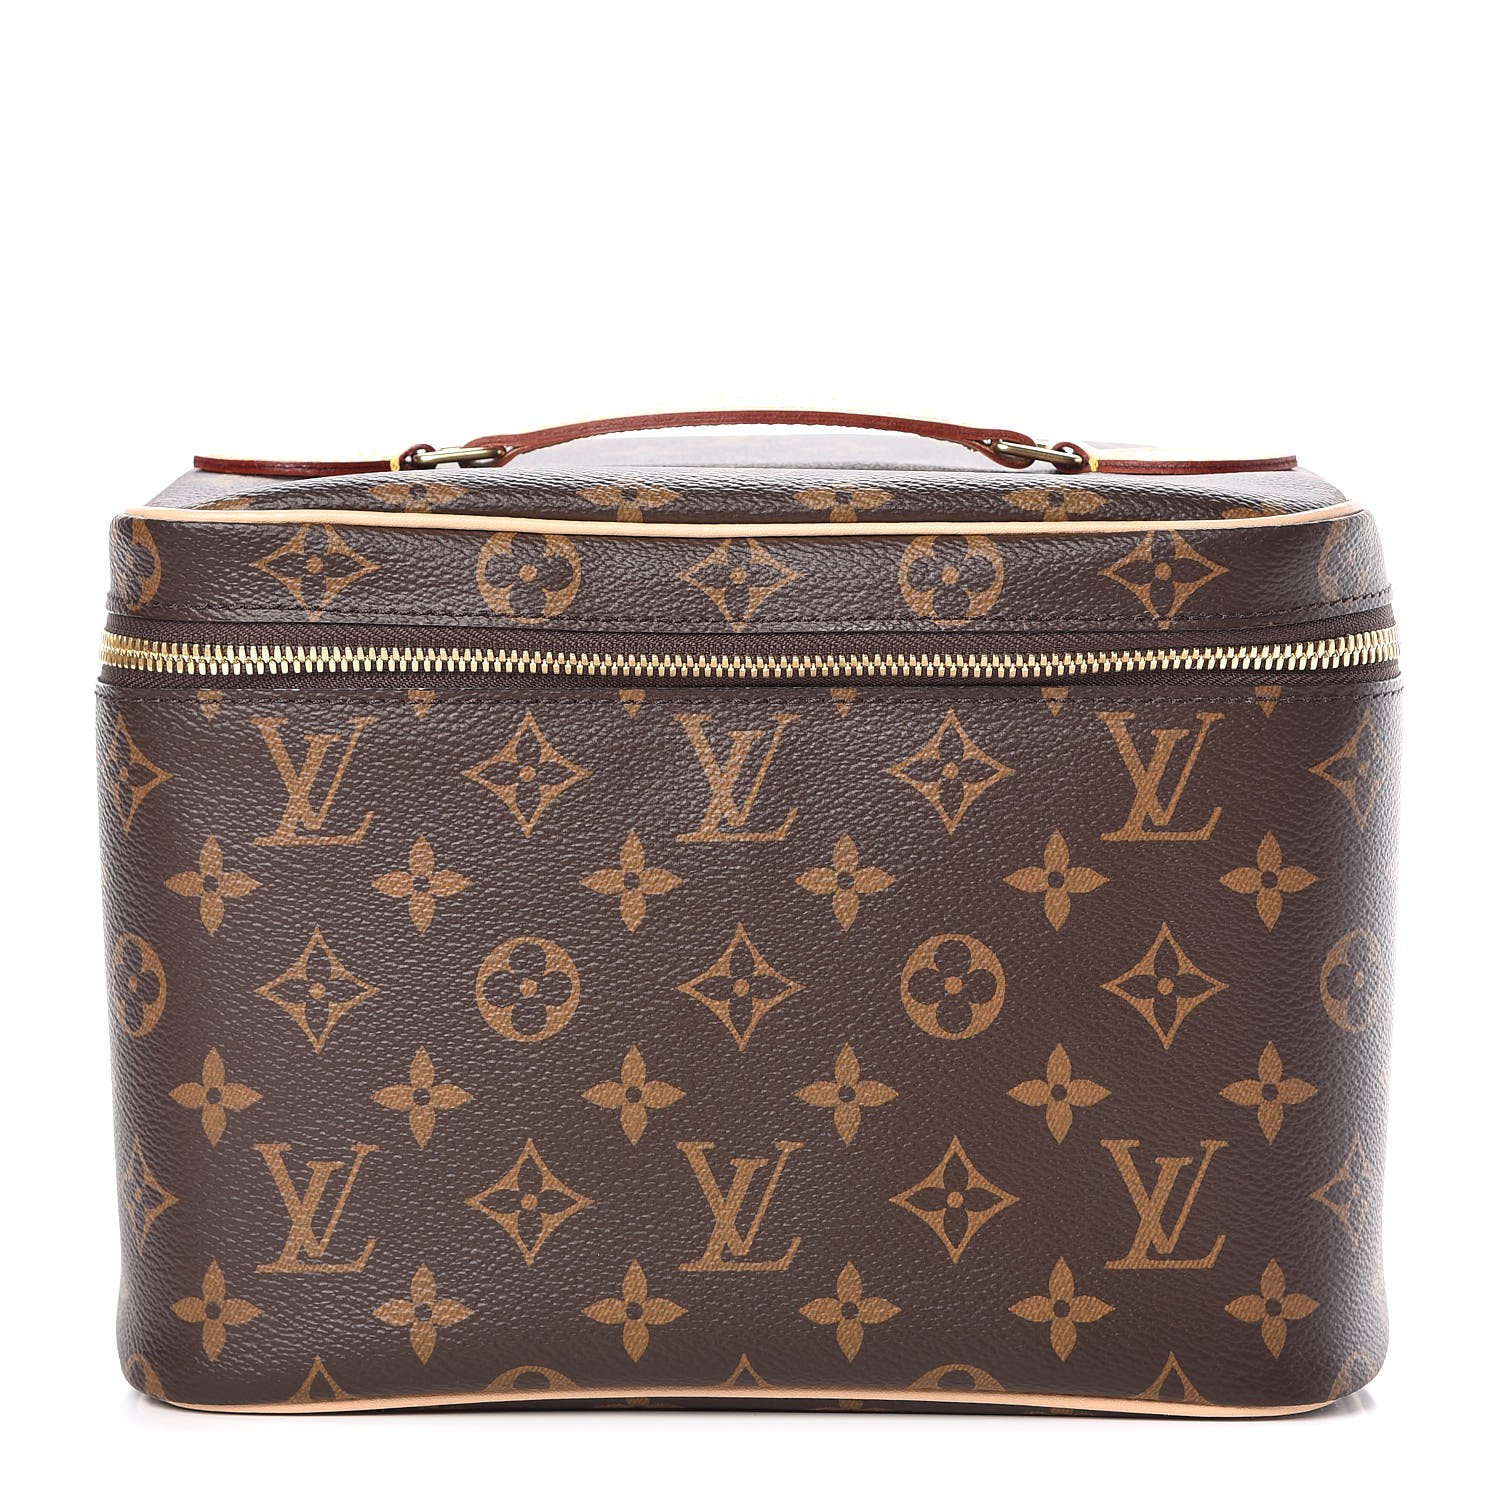 10 Louis Vuitton nice bb ideas